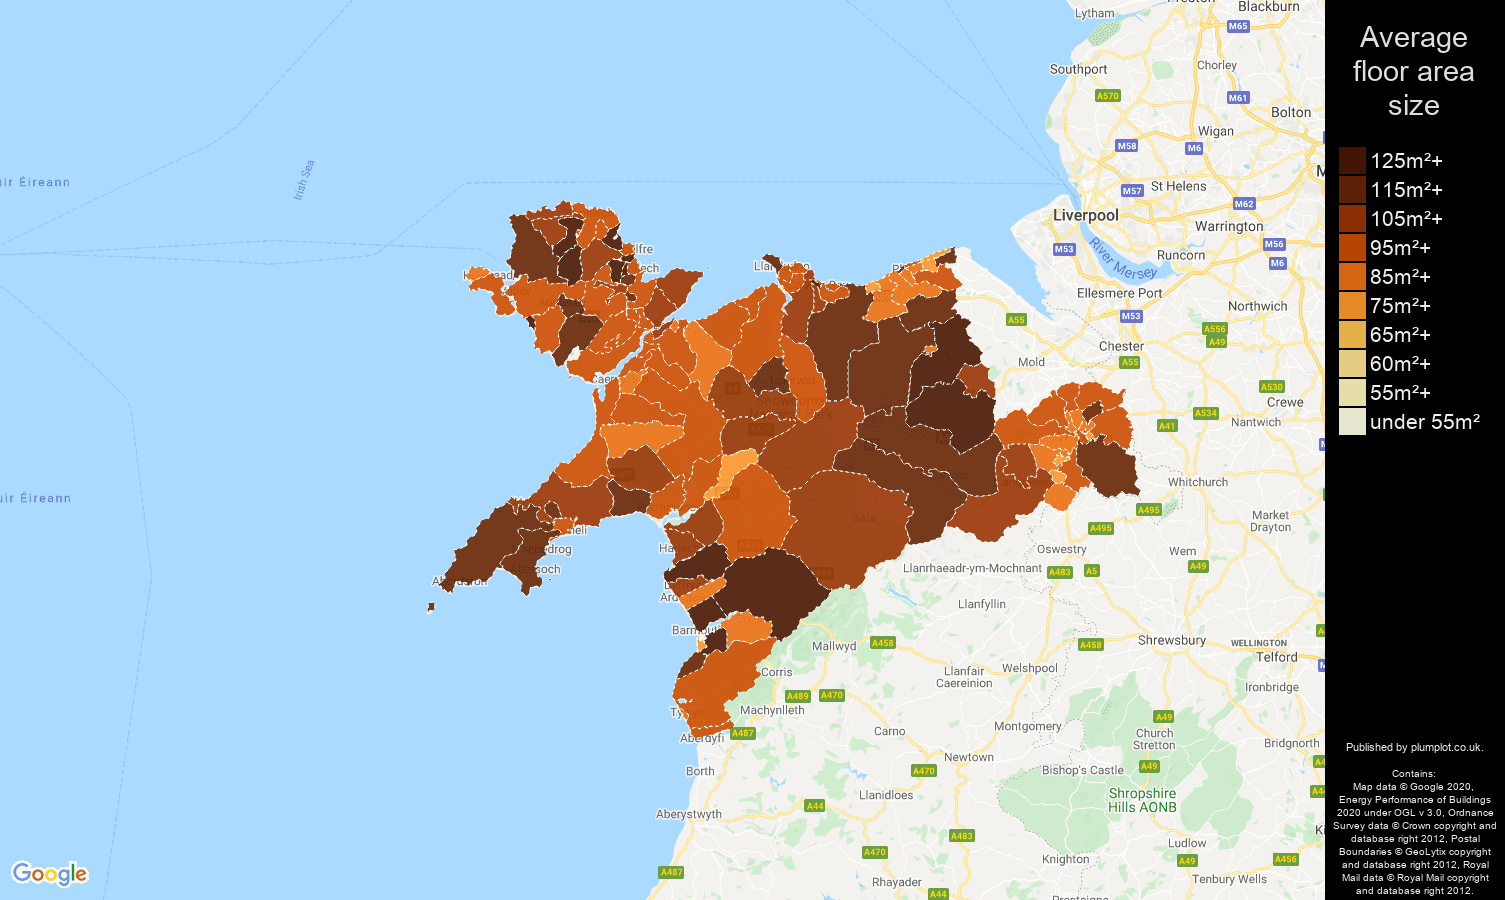 Llandudno map of average floor area size of houses